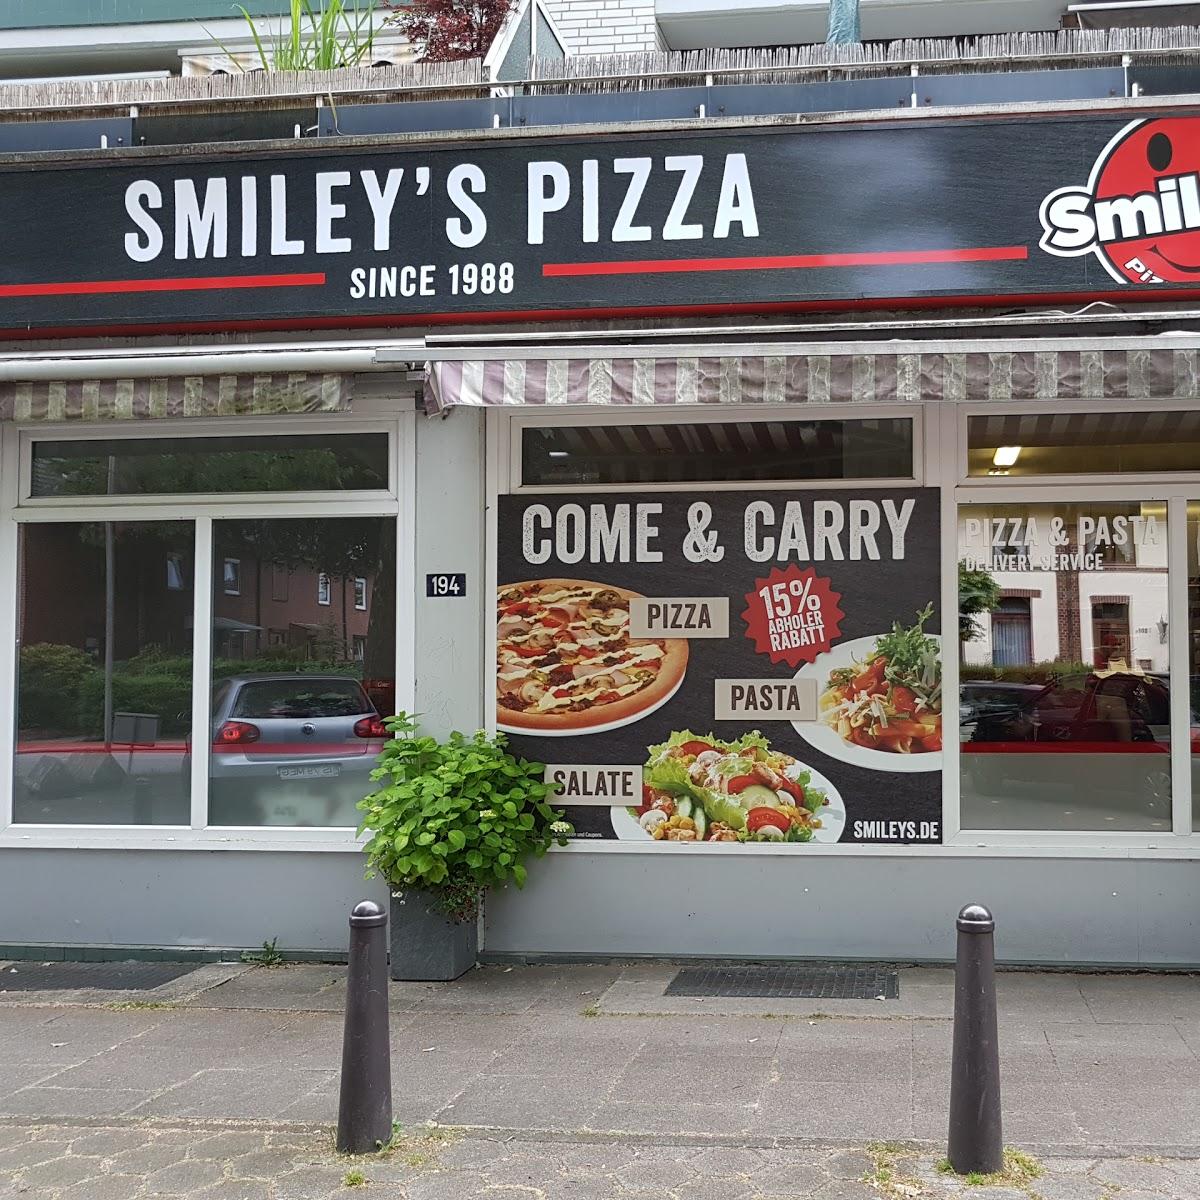 Restaurant "Smiley